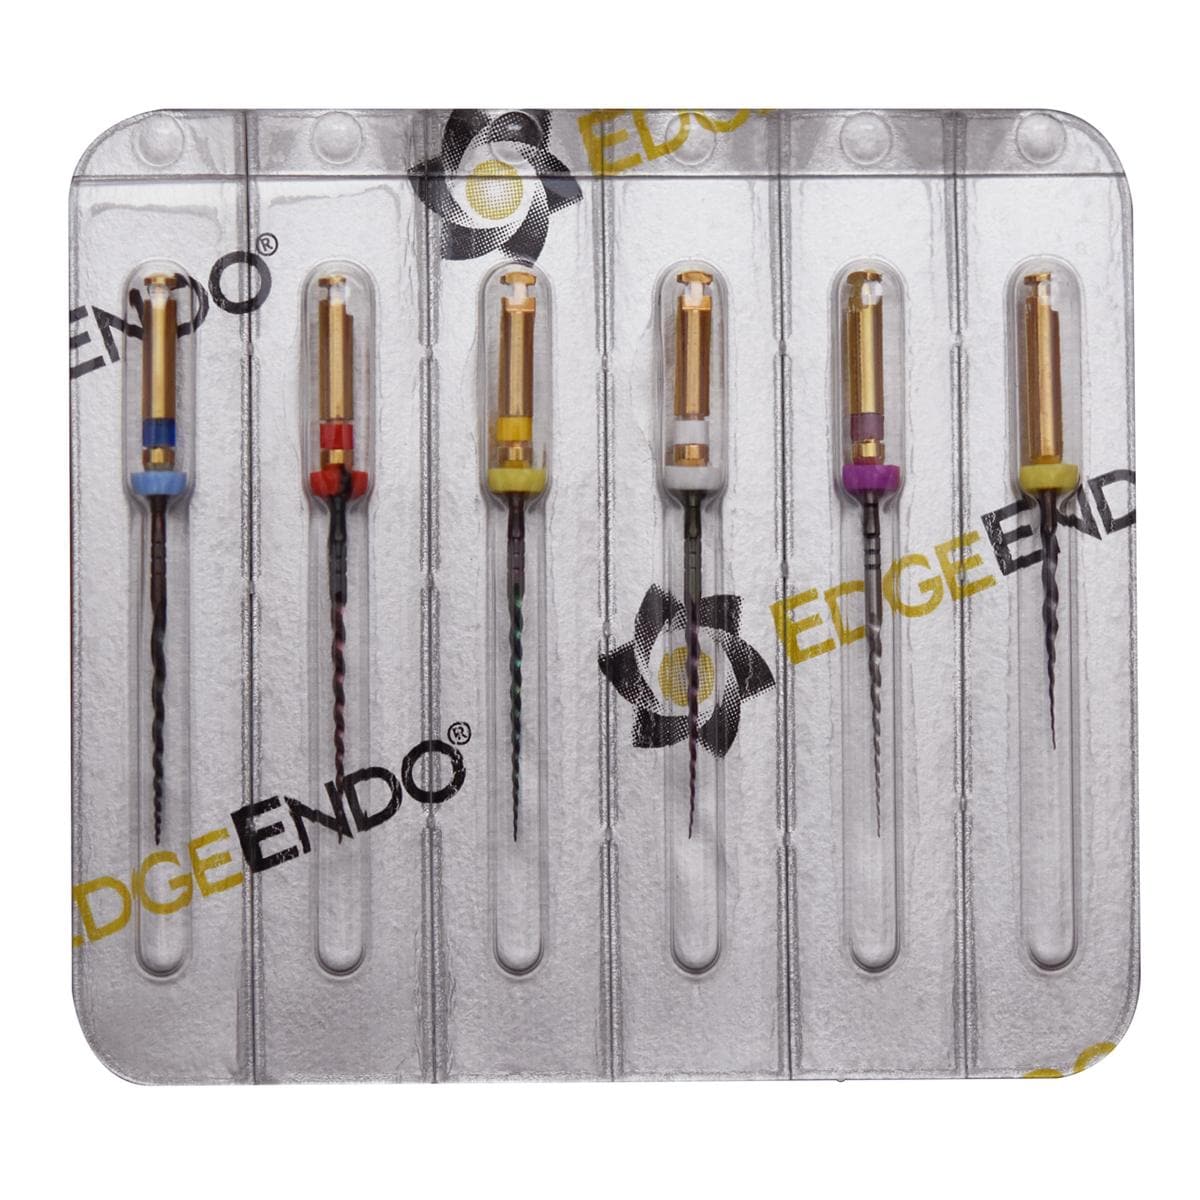 EdgeTaper Platinum - navulling (steriel verpakt) - SX - 19 mm, 6 stuks